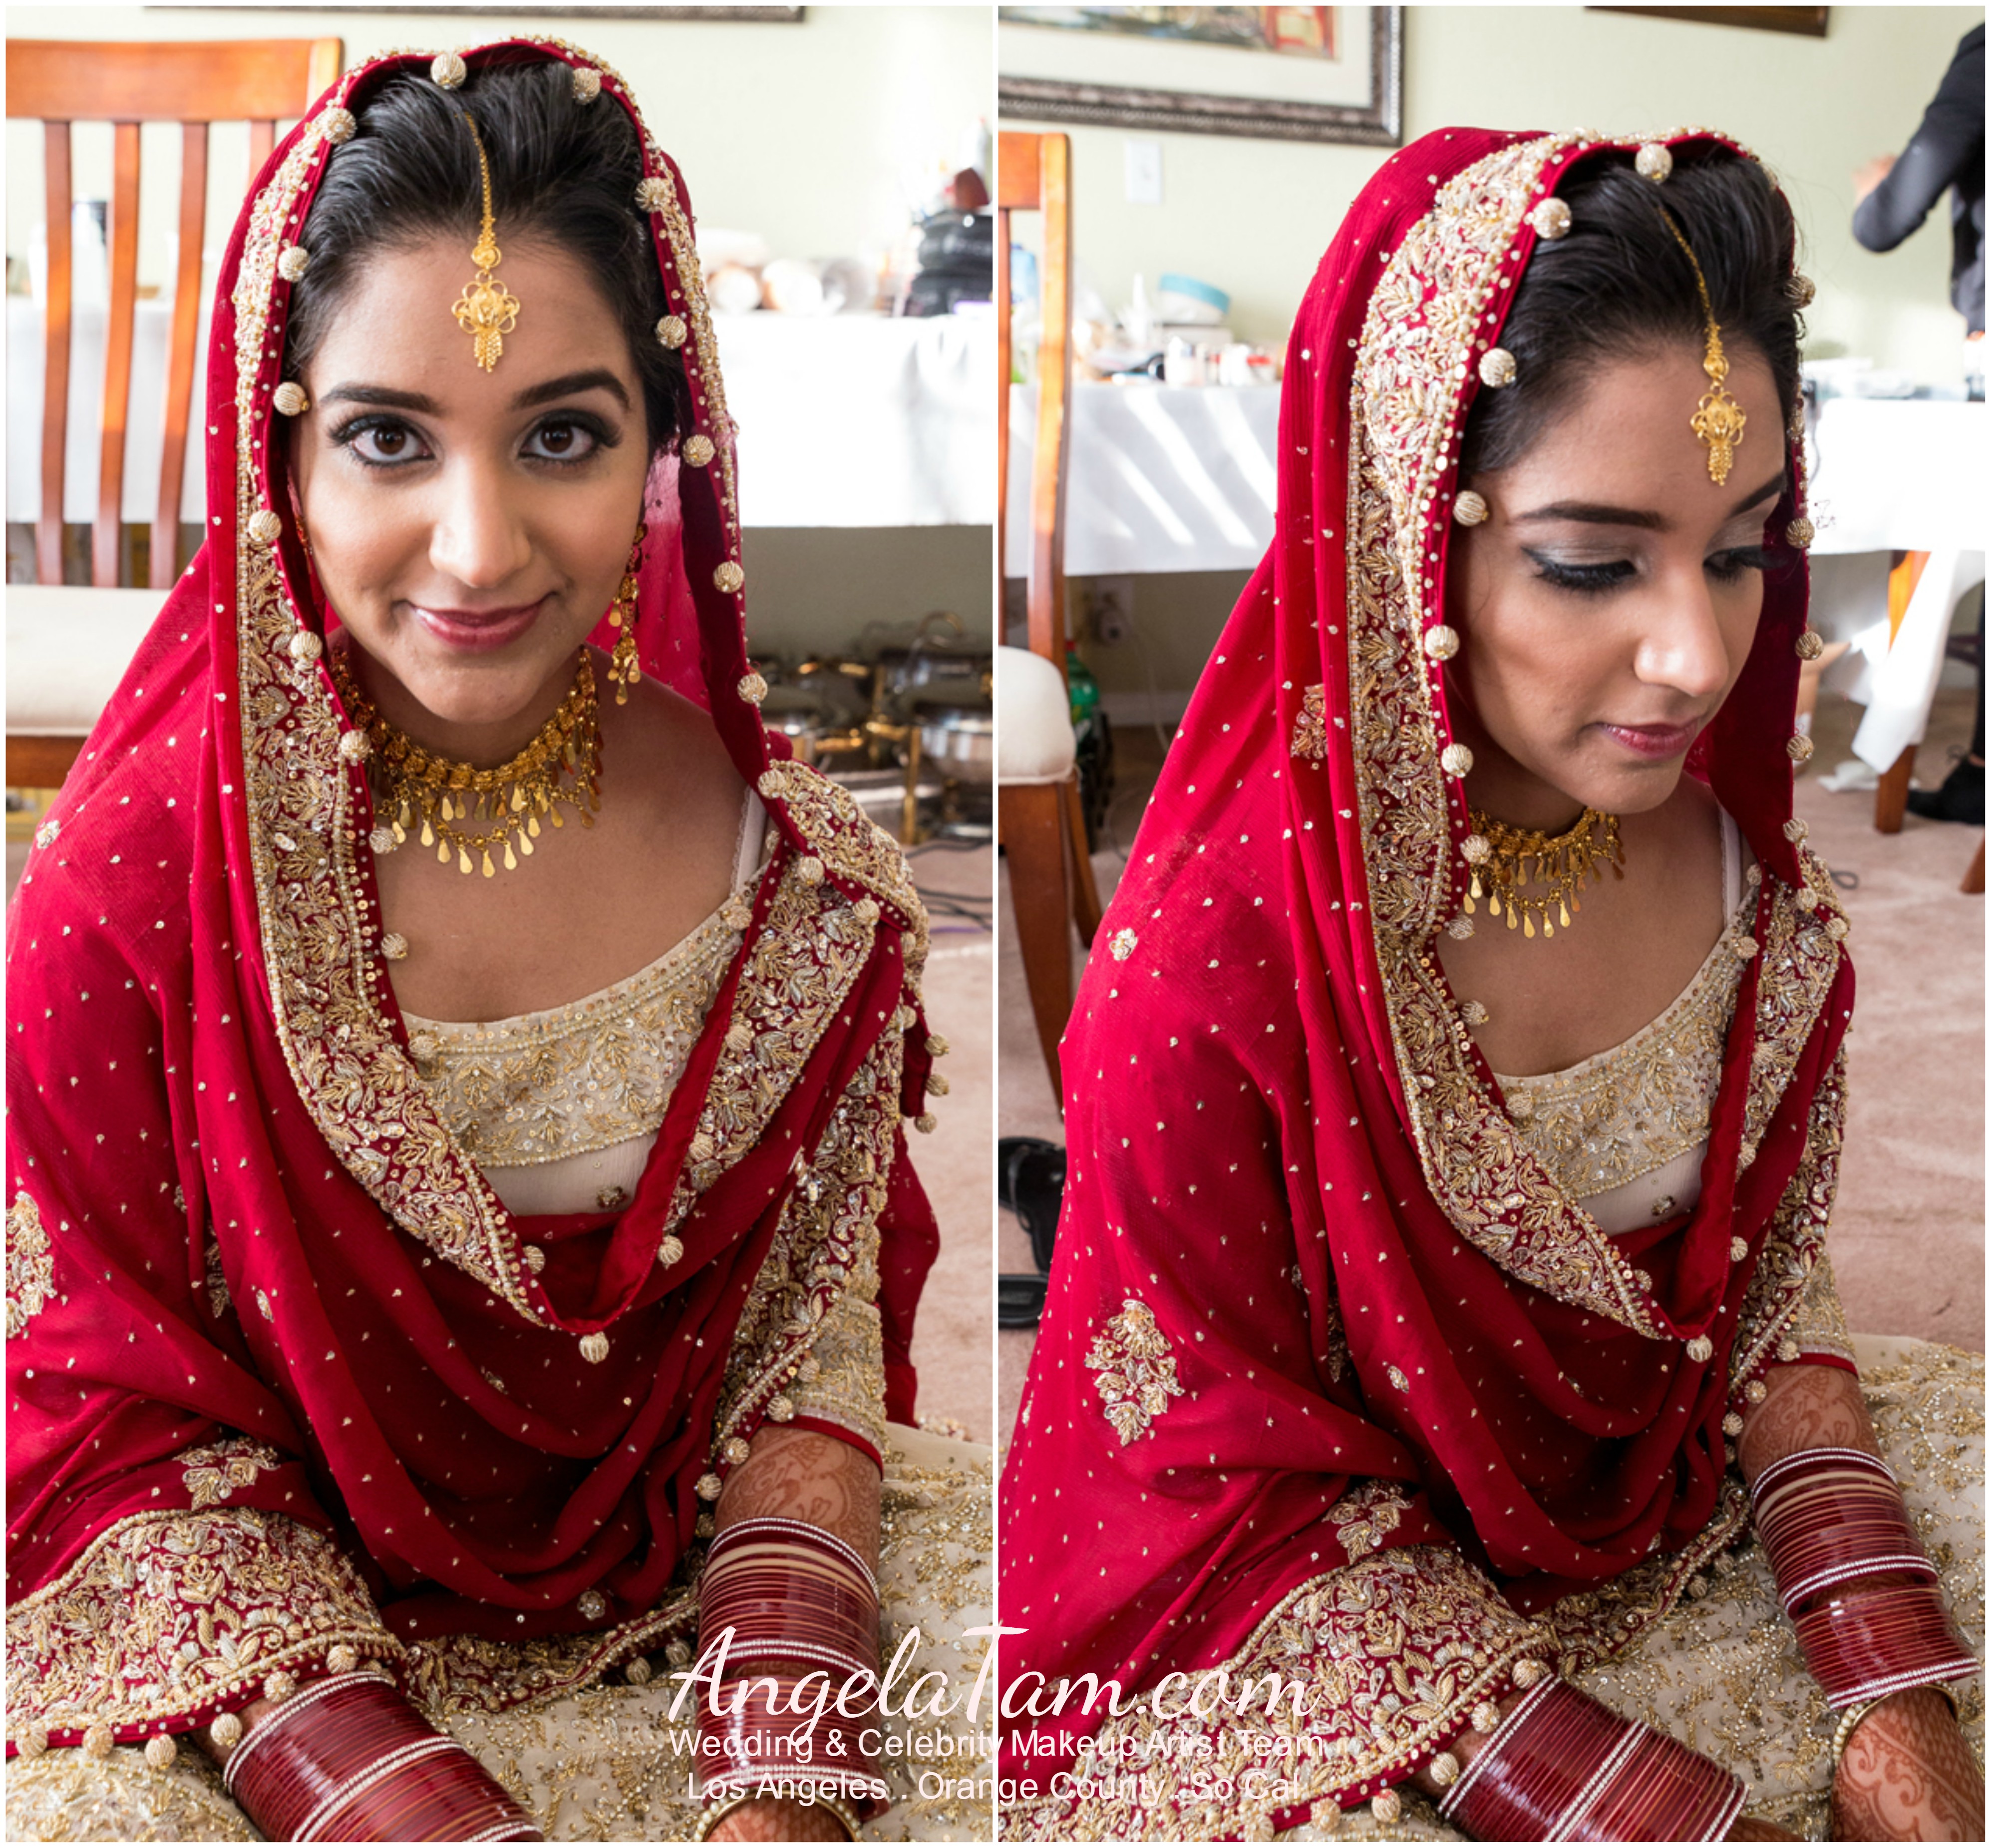 Indian Wedding Hair And Makeup Artist Wavy Haircut